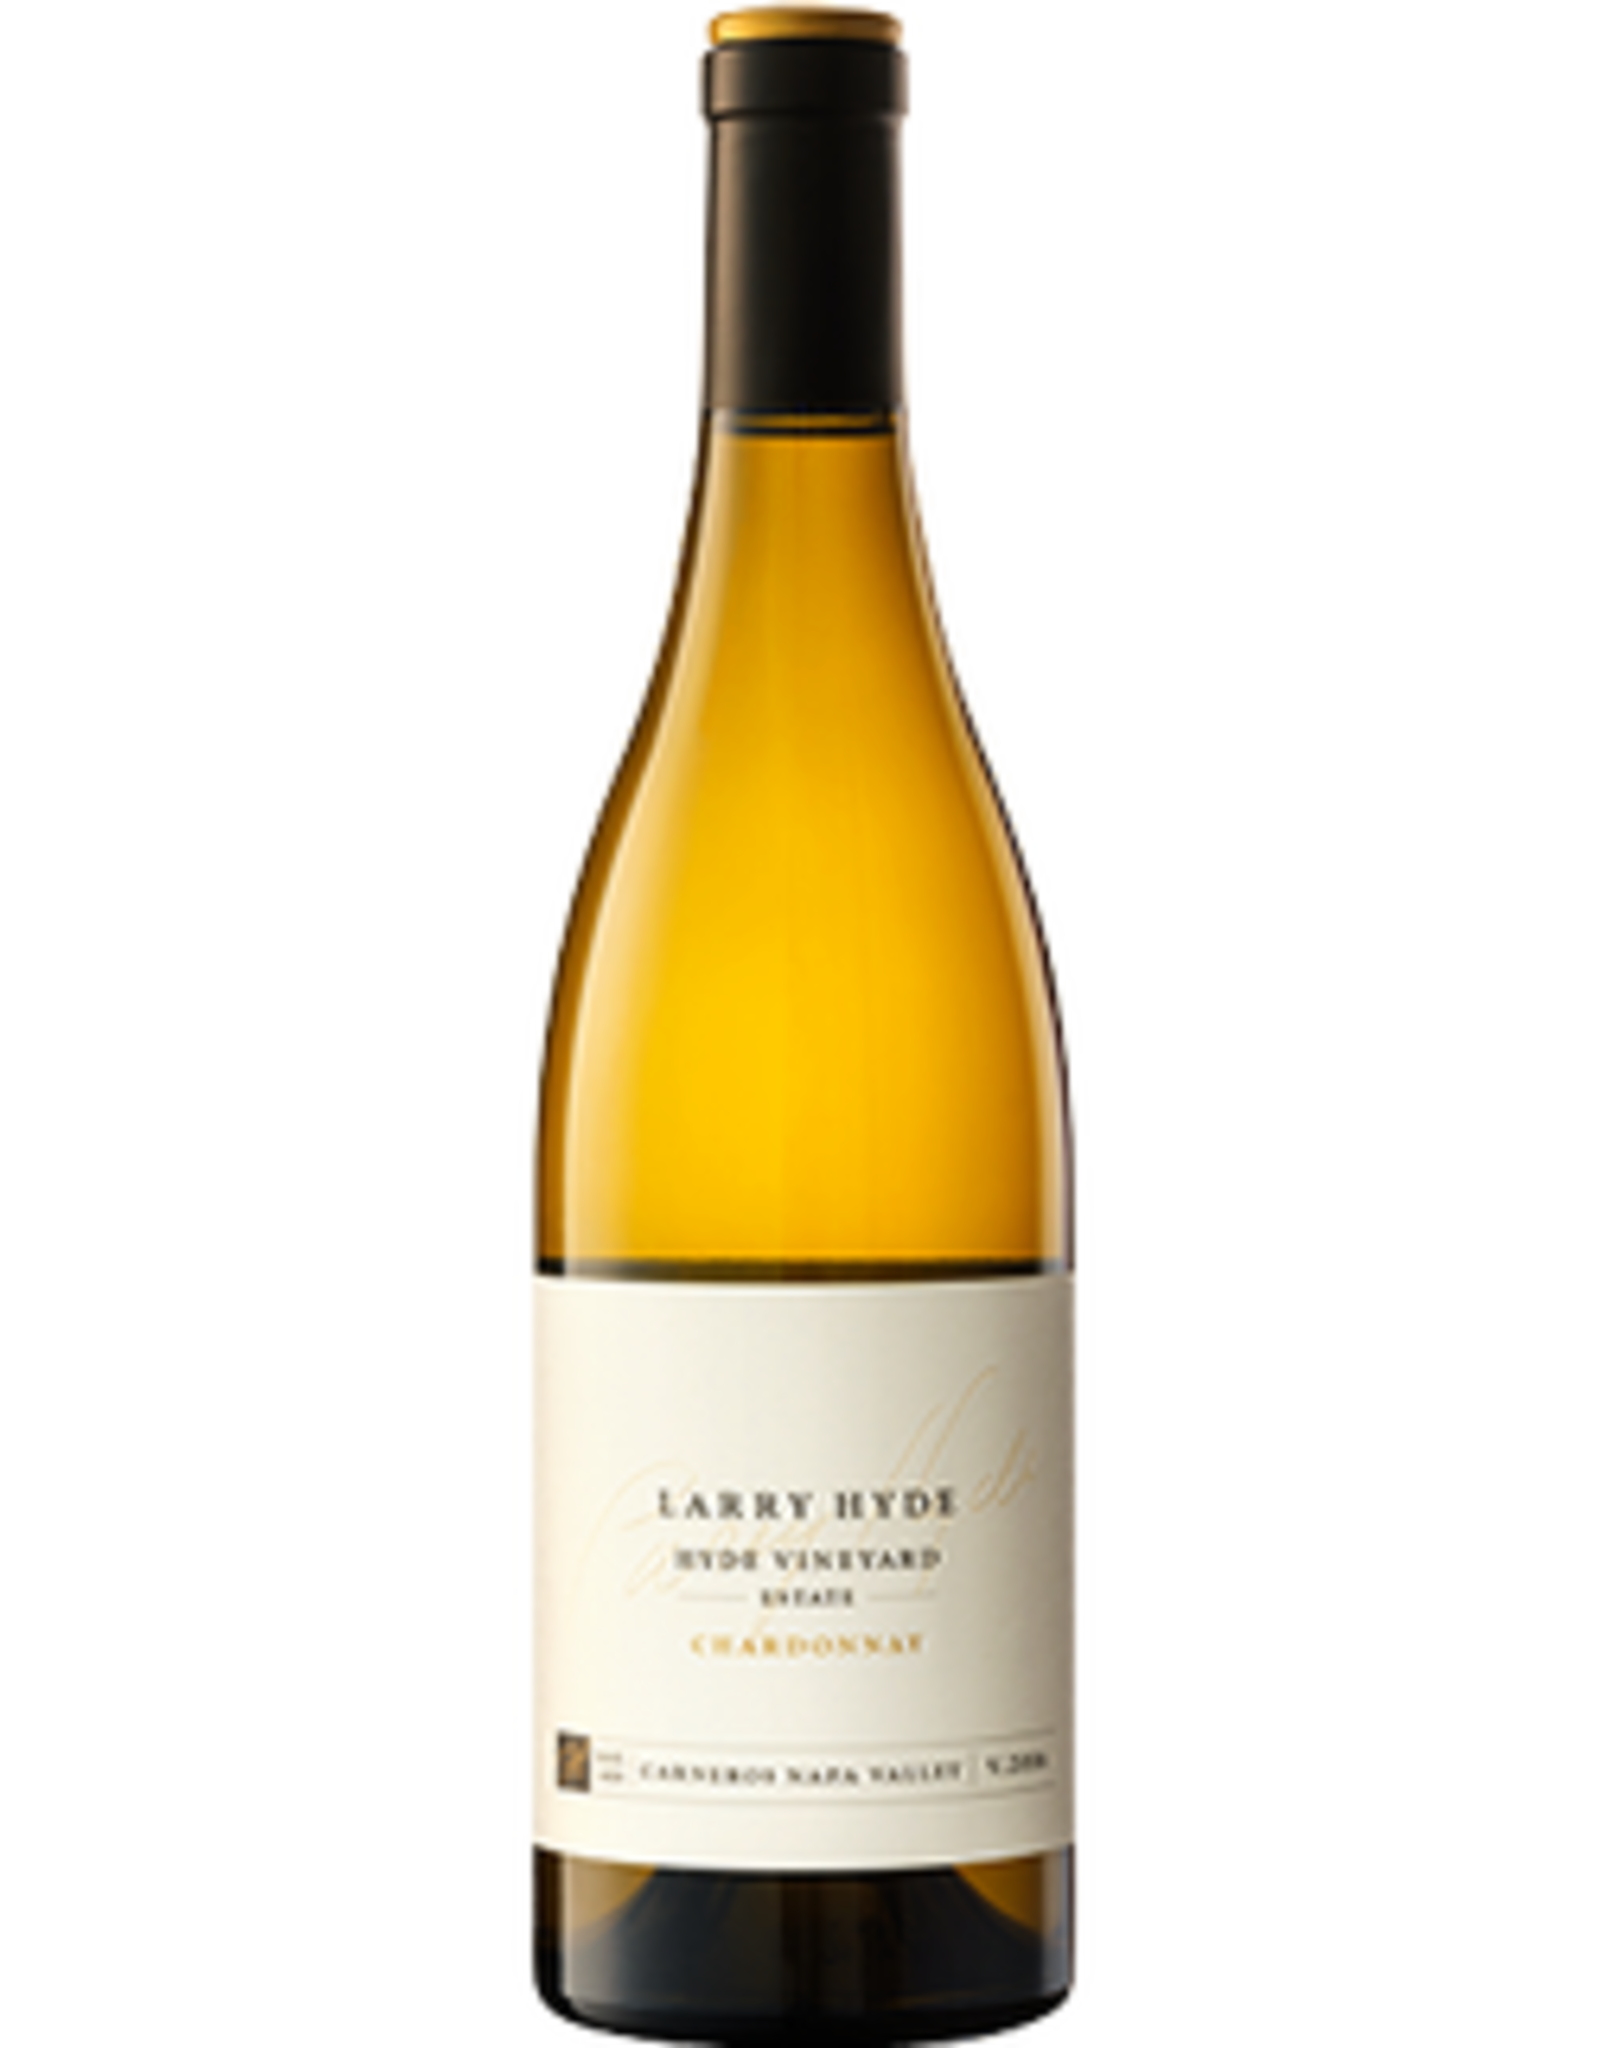 Larry Hyde  Vineyards,  Hyde Vineyard Carneros Chardonnay